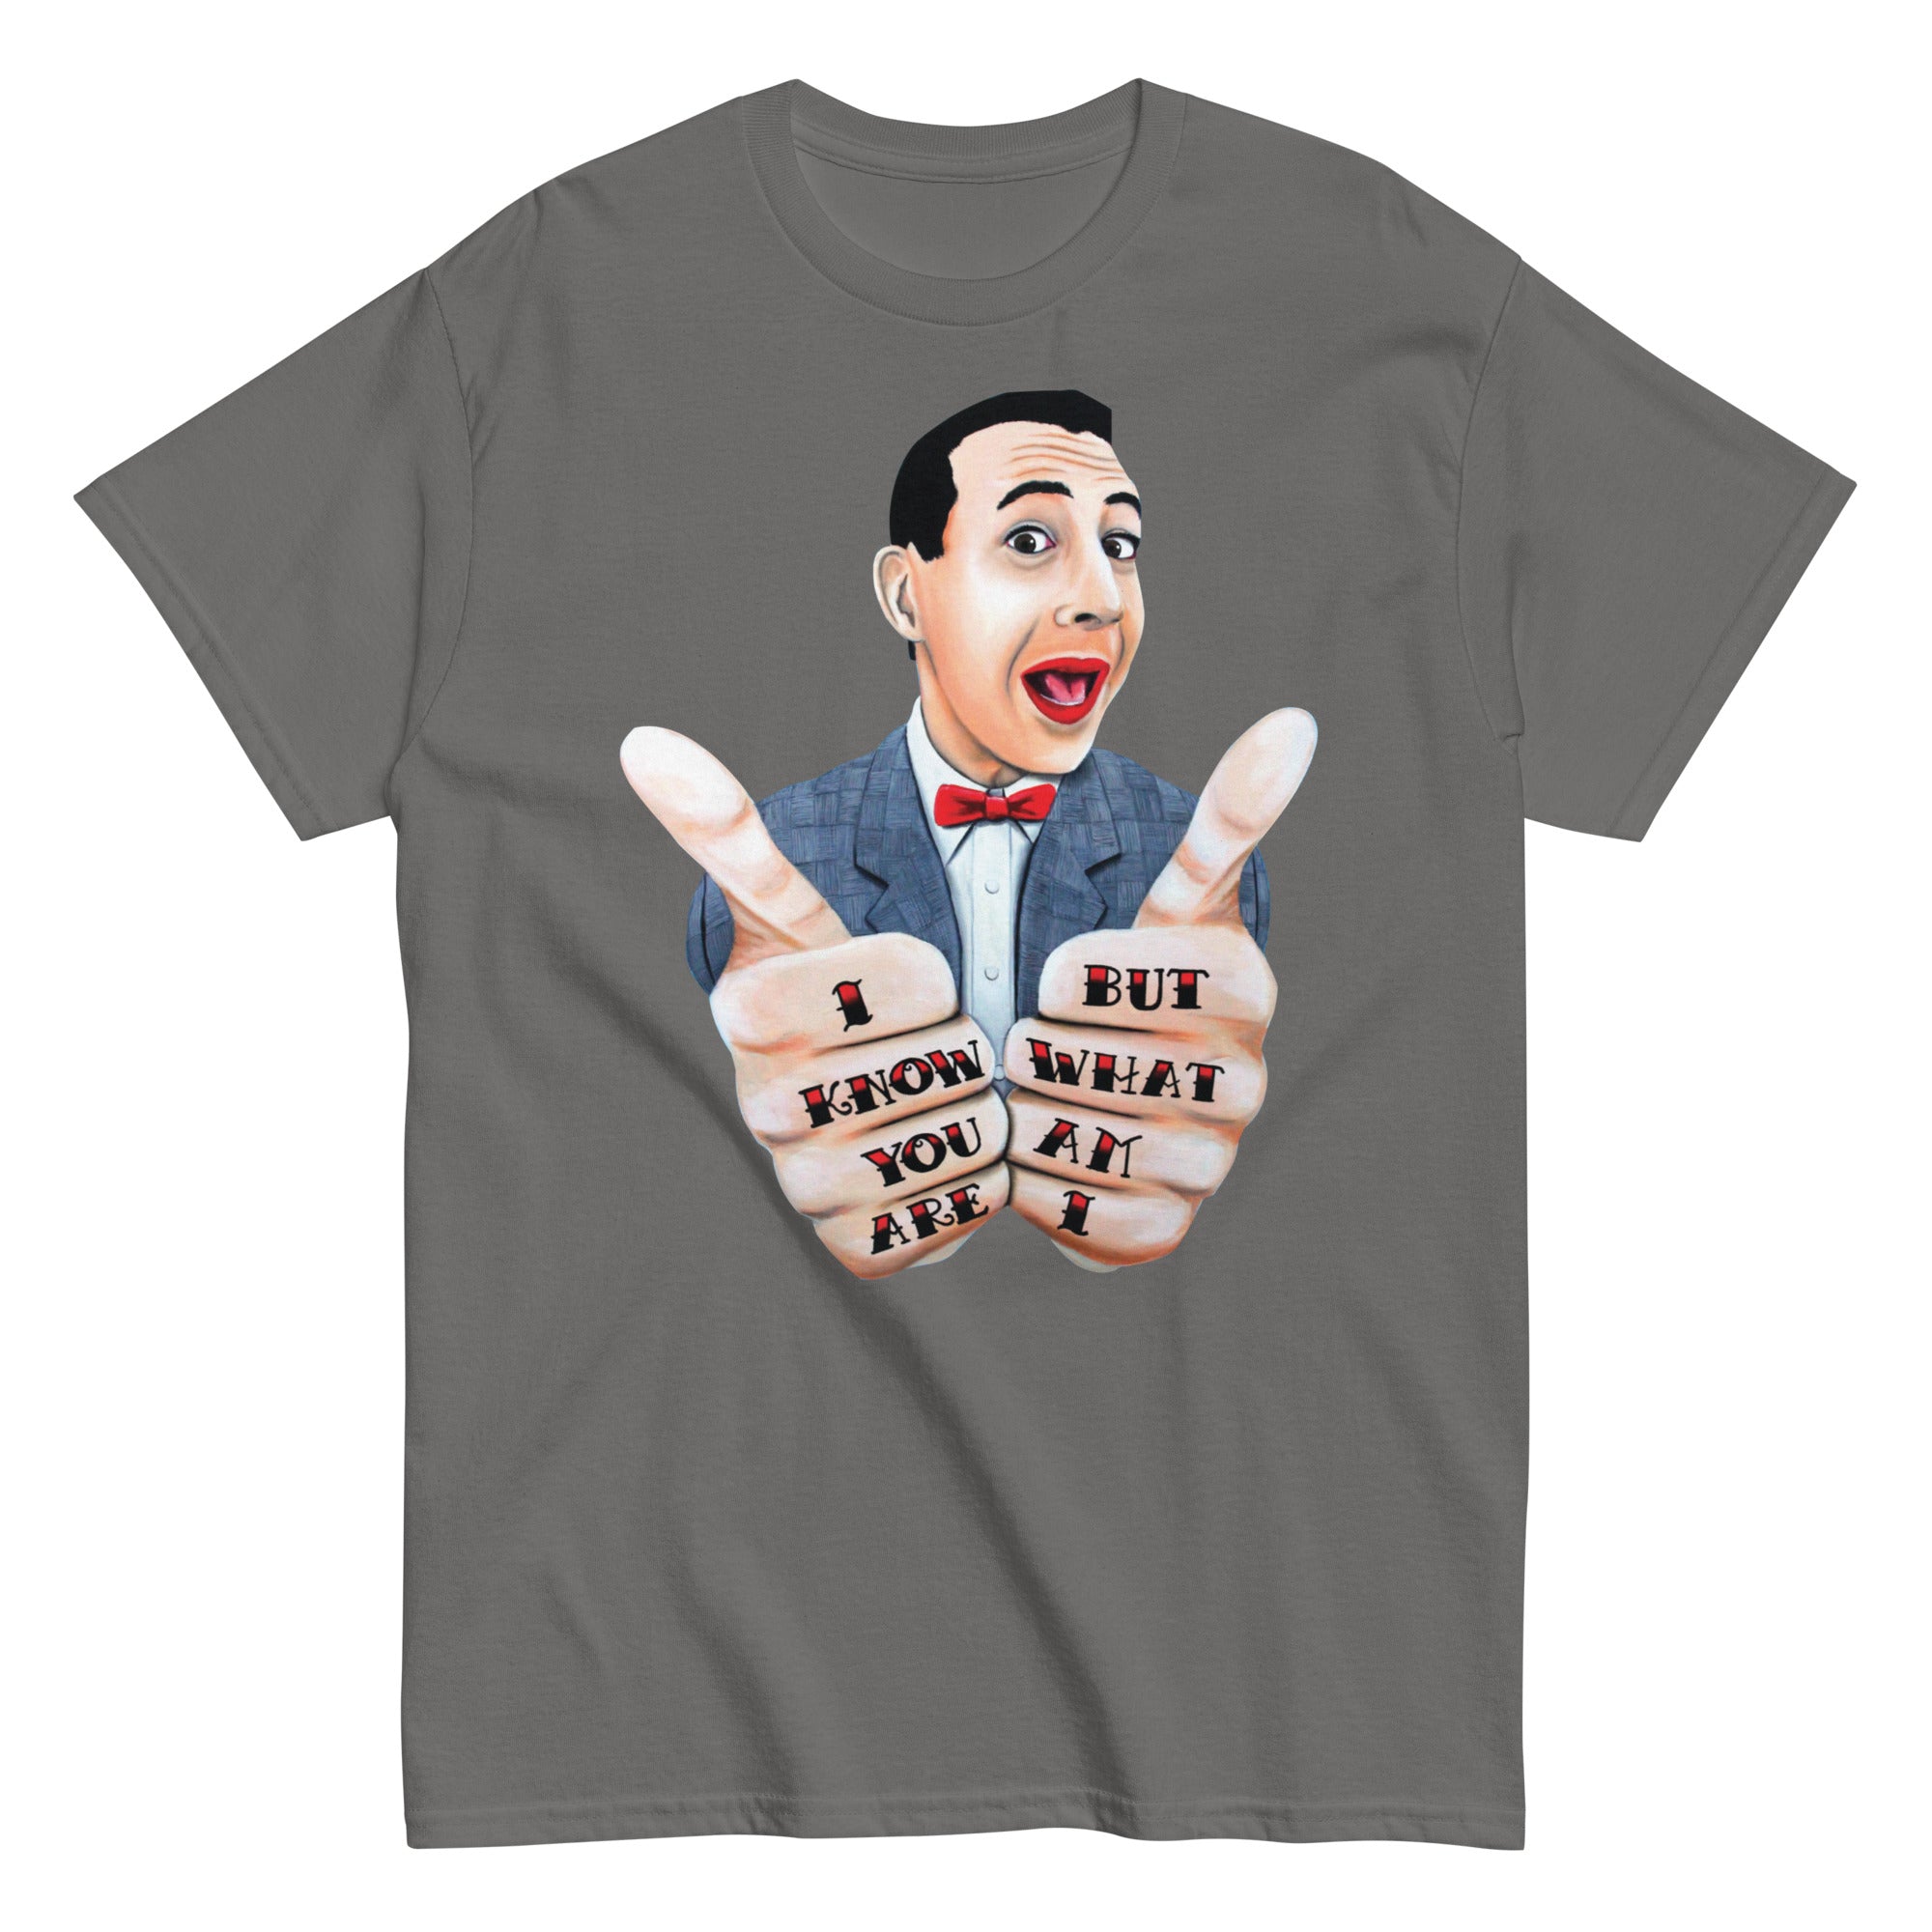 Pee Wee Herman uni-sex t shirt